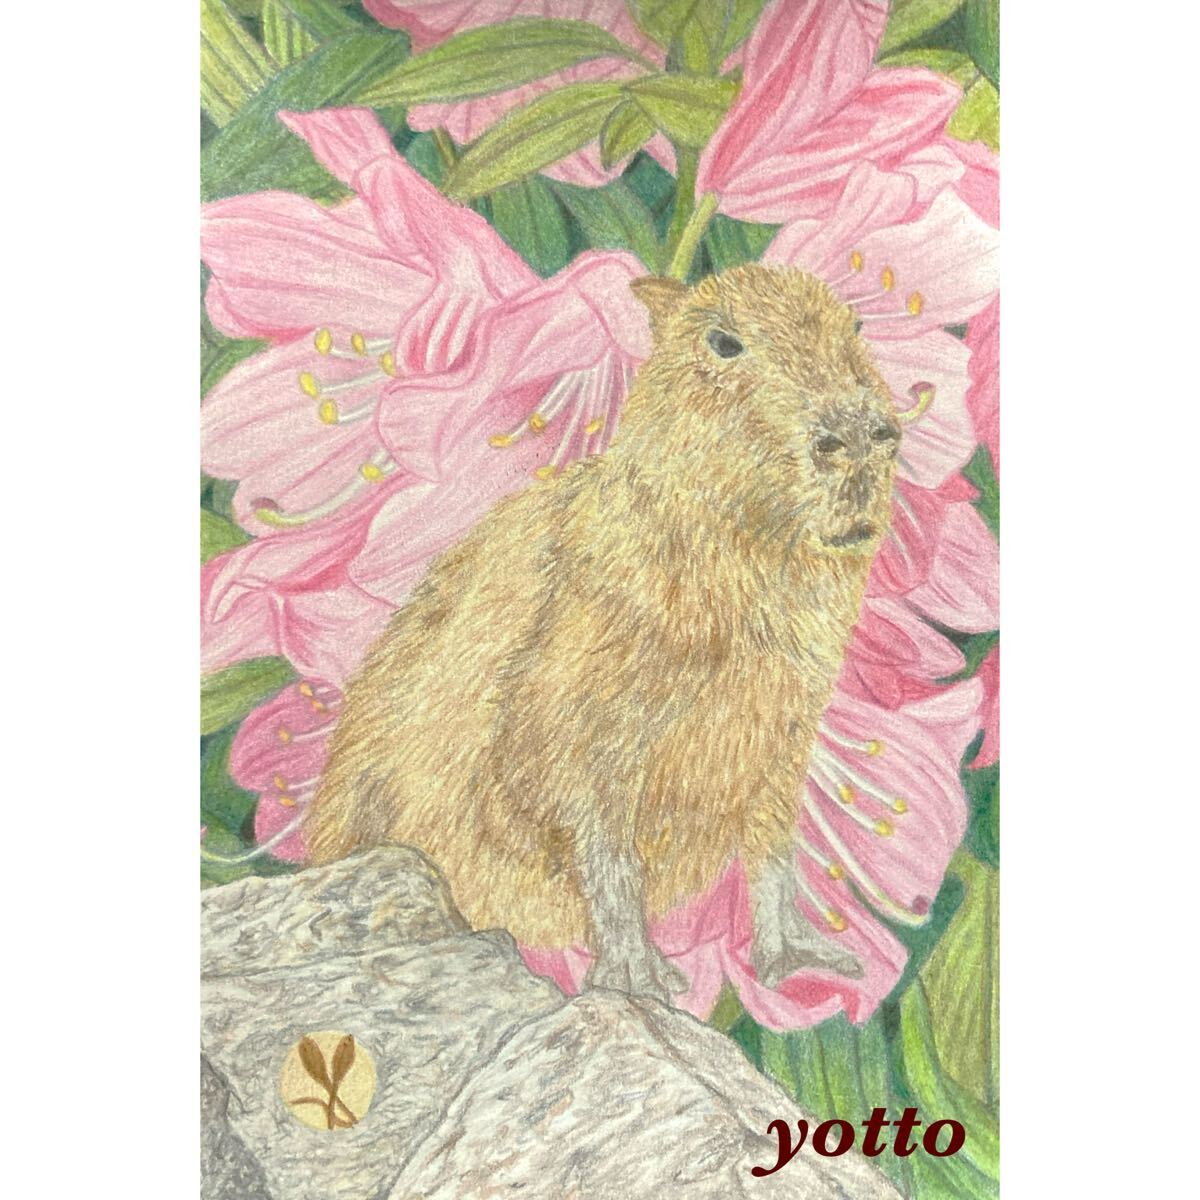 Colored pencil drawing Capybara ~ Hana ~ Postcard size, frame included ◇◆Hand-drawn◇Original◆Capybara◇◆yotto, Artwork, Painting, Pencil drawing, Charcoal drawing